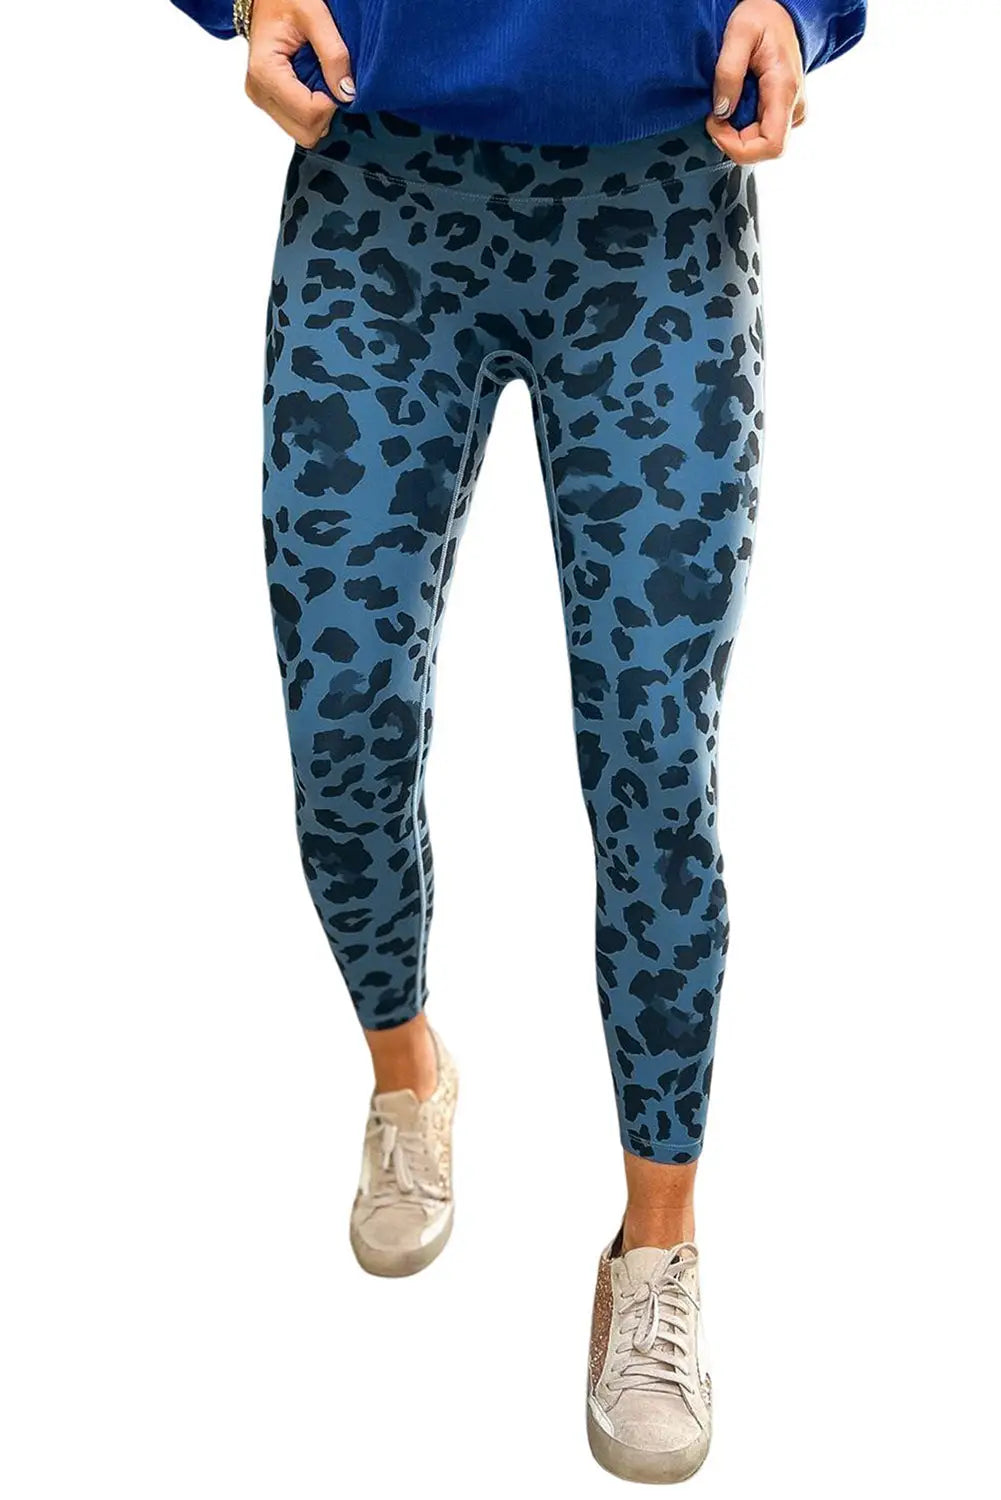 Gray classic leopard print active leggings